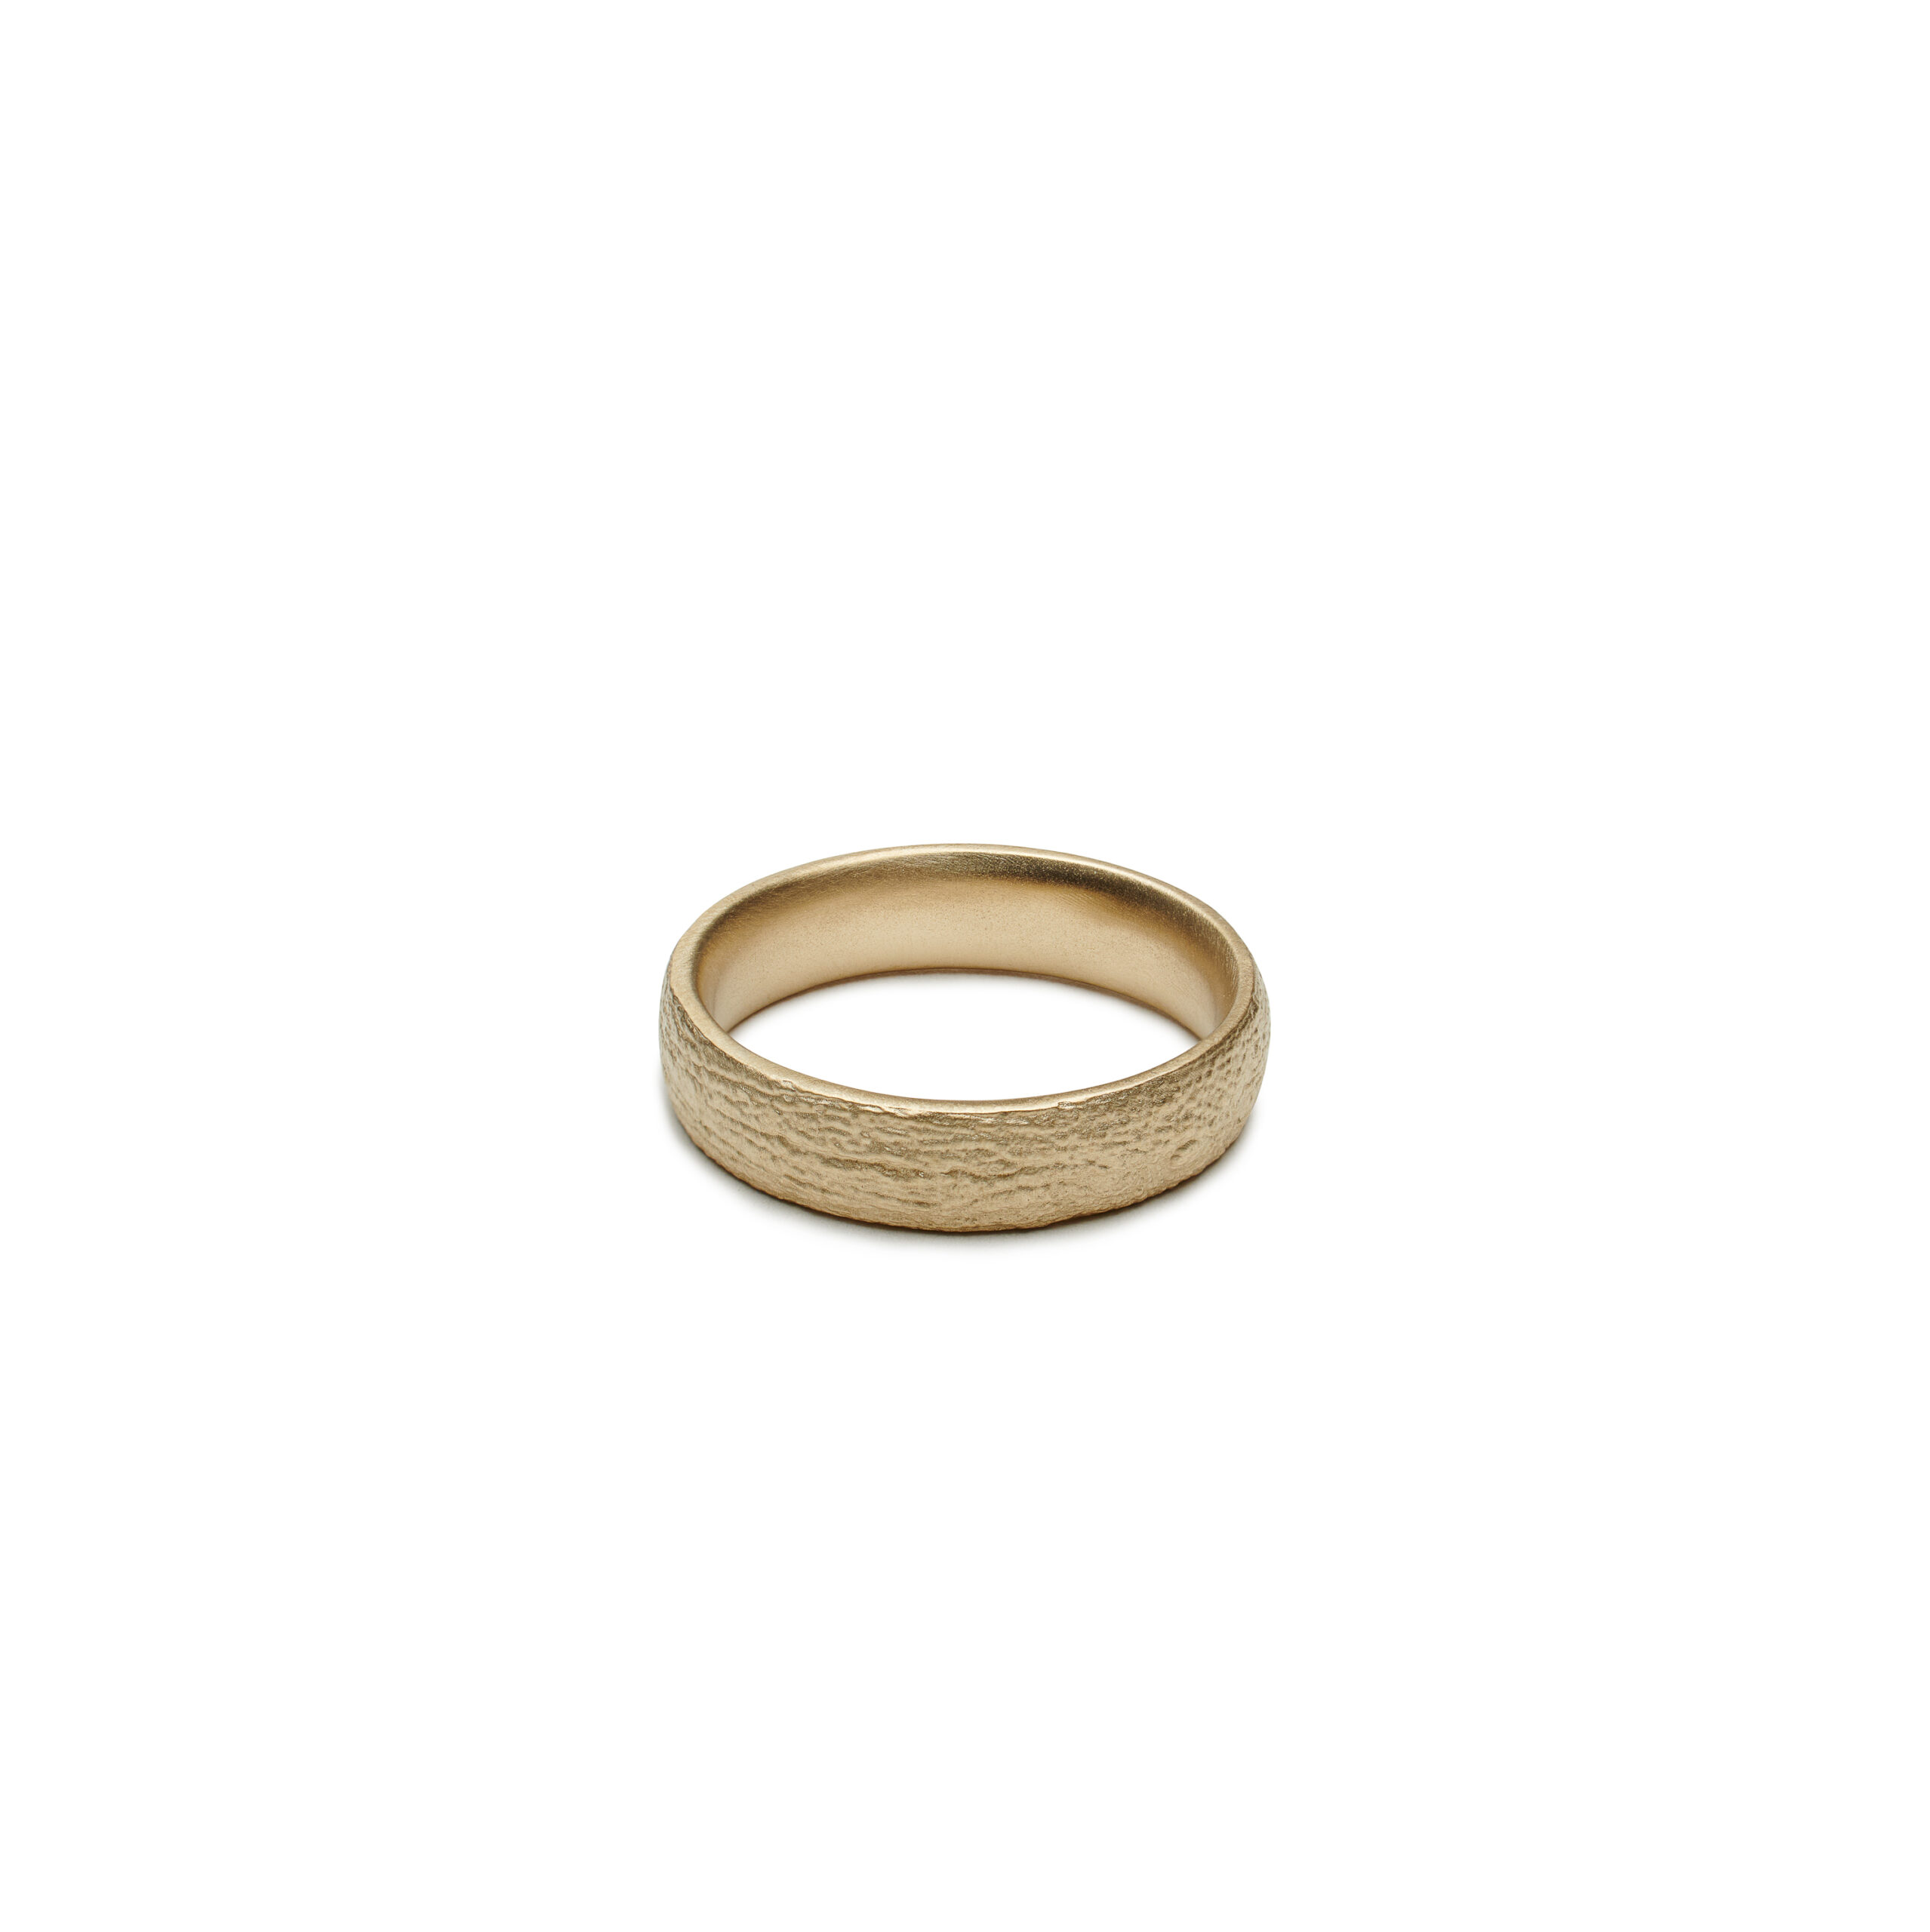 Gold ring depicting tree bark